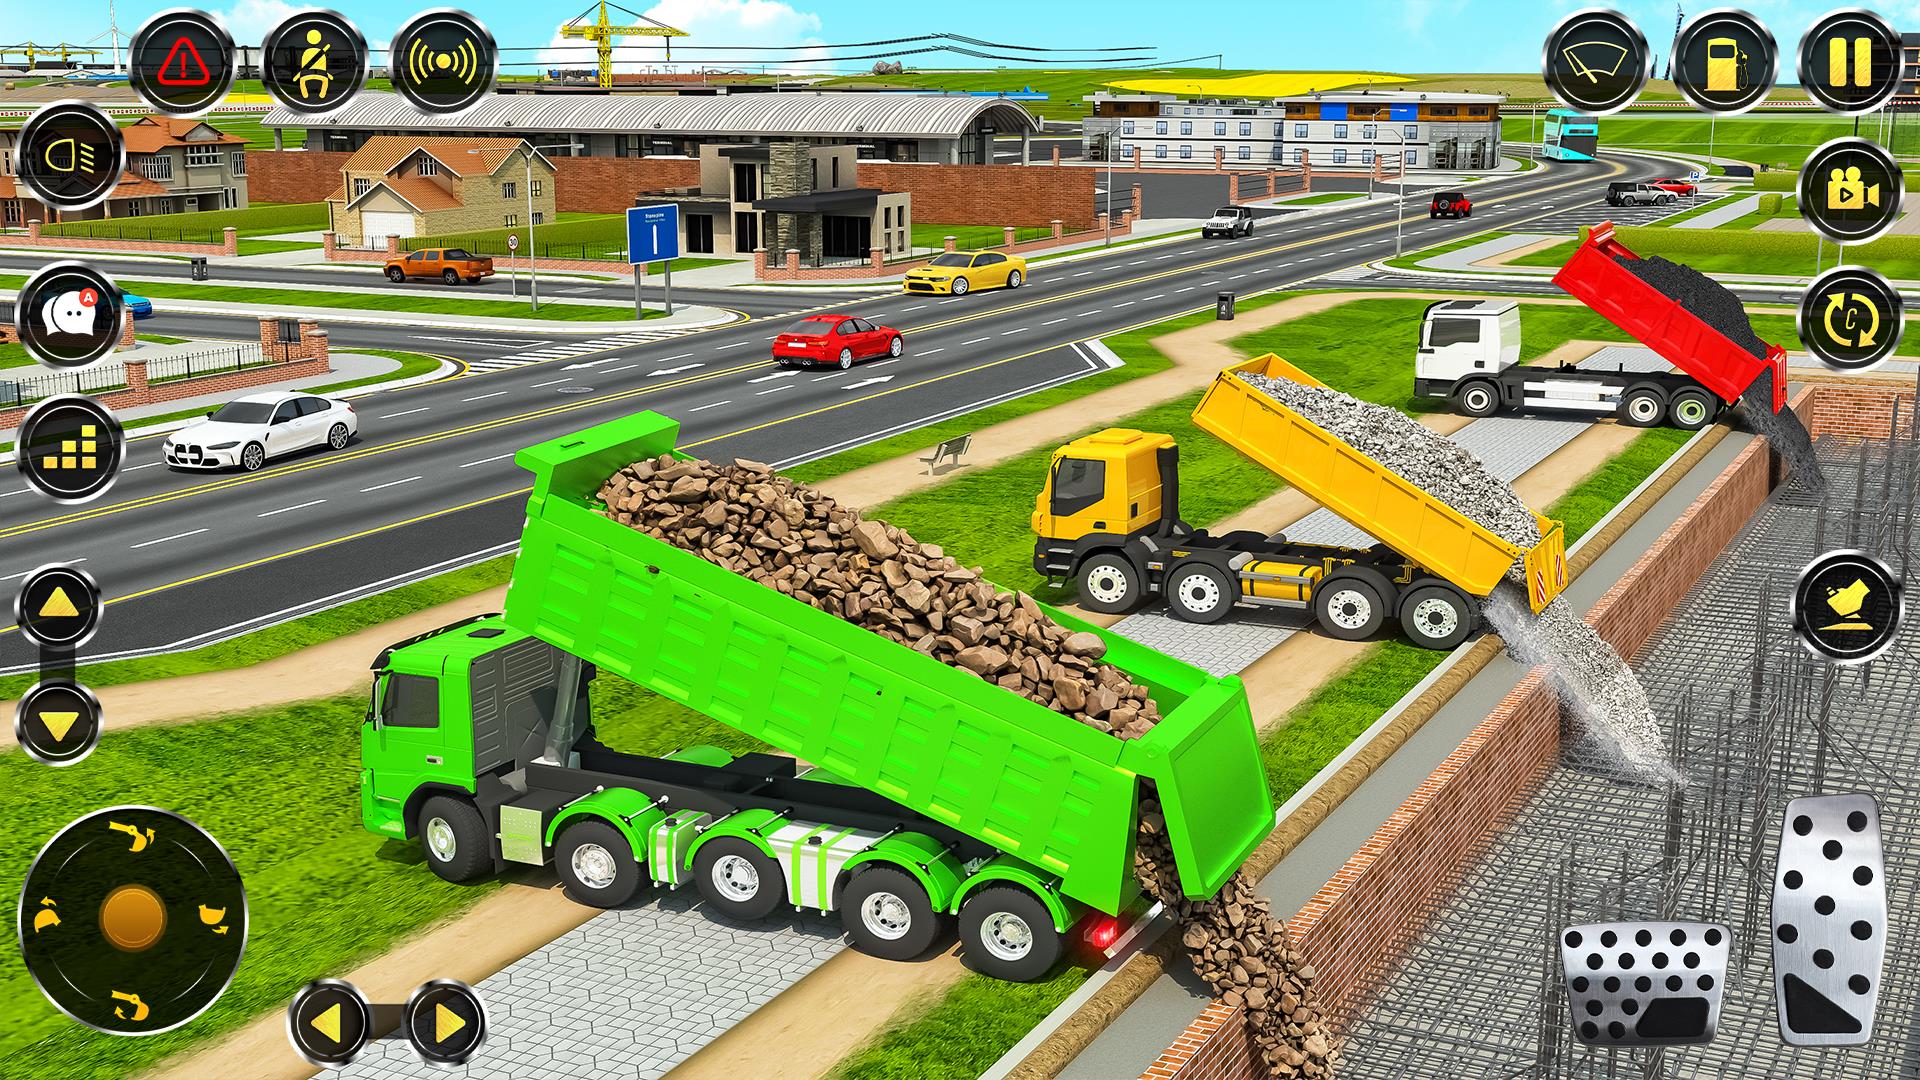 City Construction JCB Game 3D Screenshot 1